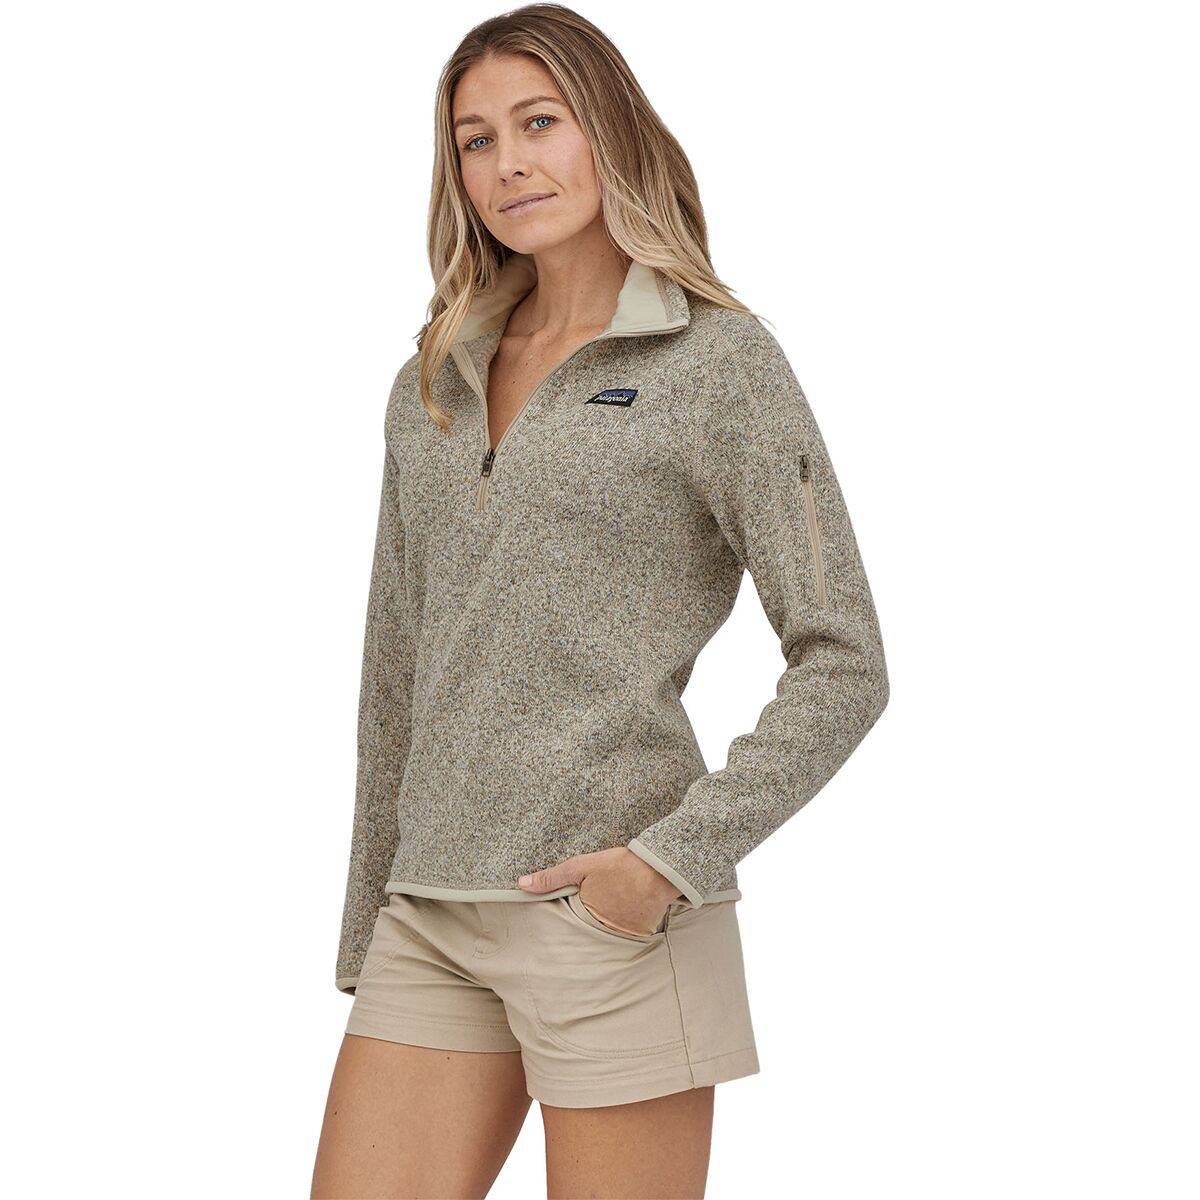 Patagonia Better Sweater 1/4-Zip Fleece Jacket - Women's - Clothing | Backcountry